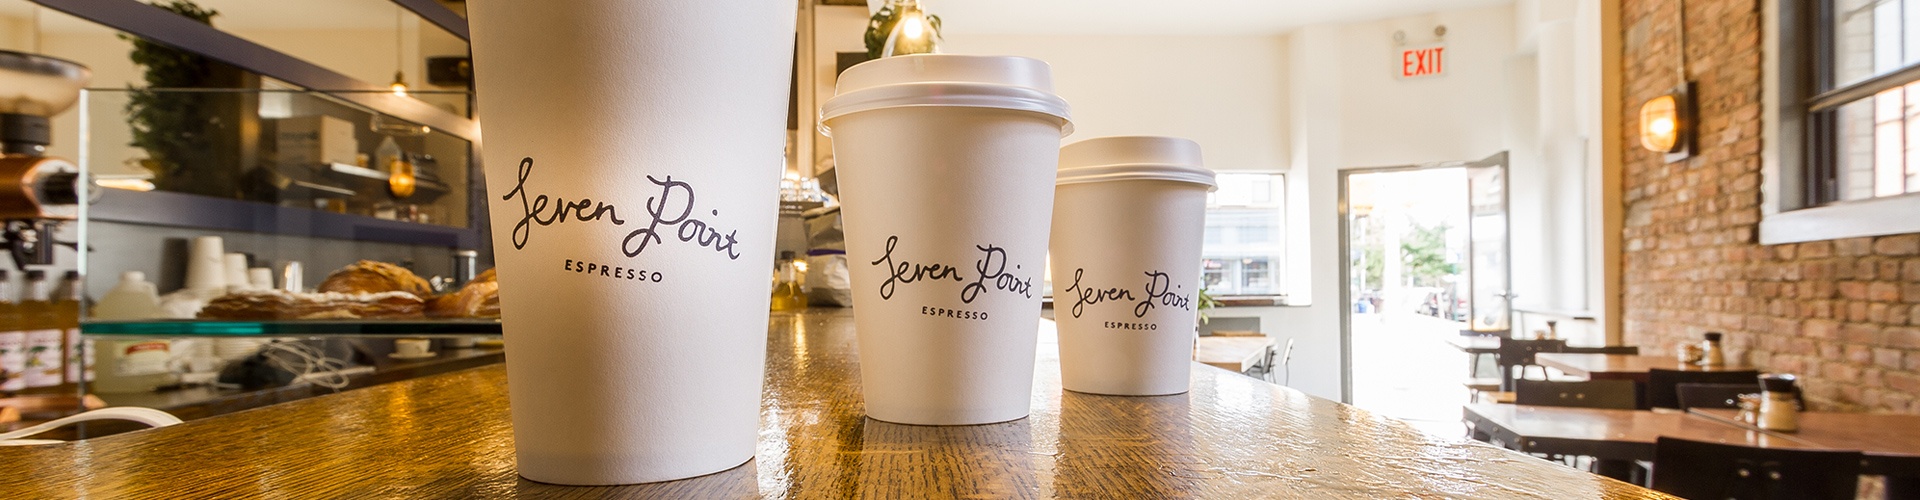 The Renovation: Seven Point Espresso – Australian Coffee comes to Brooklyn